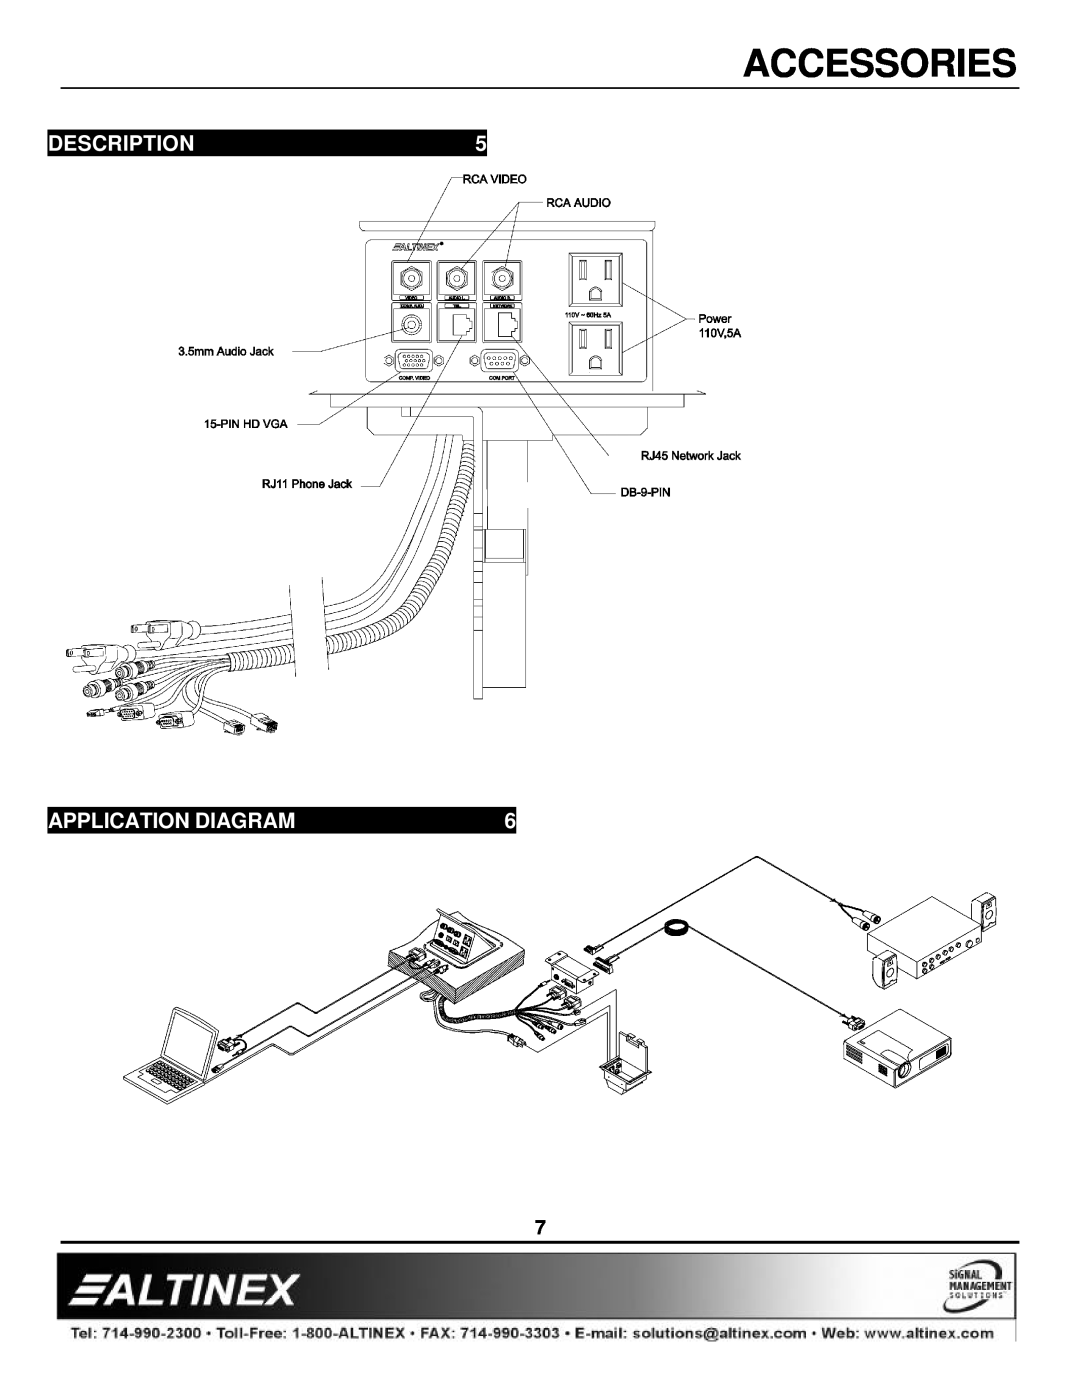 Altinex TNP500/502 manual Description, Application Diagram, Accessories 